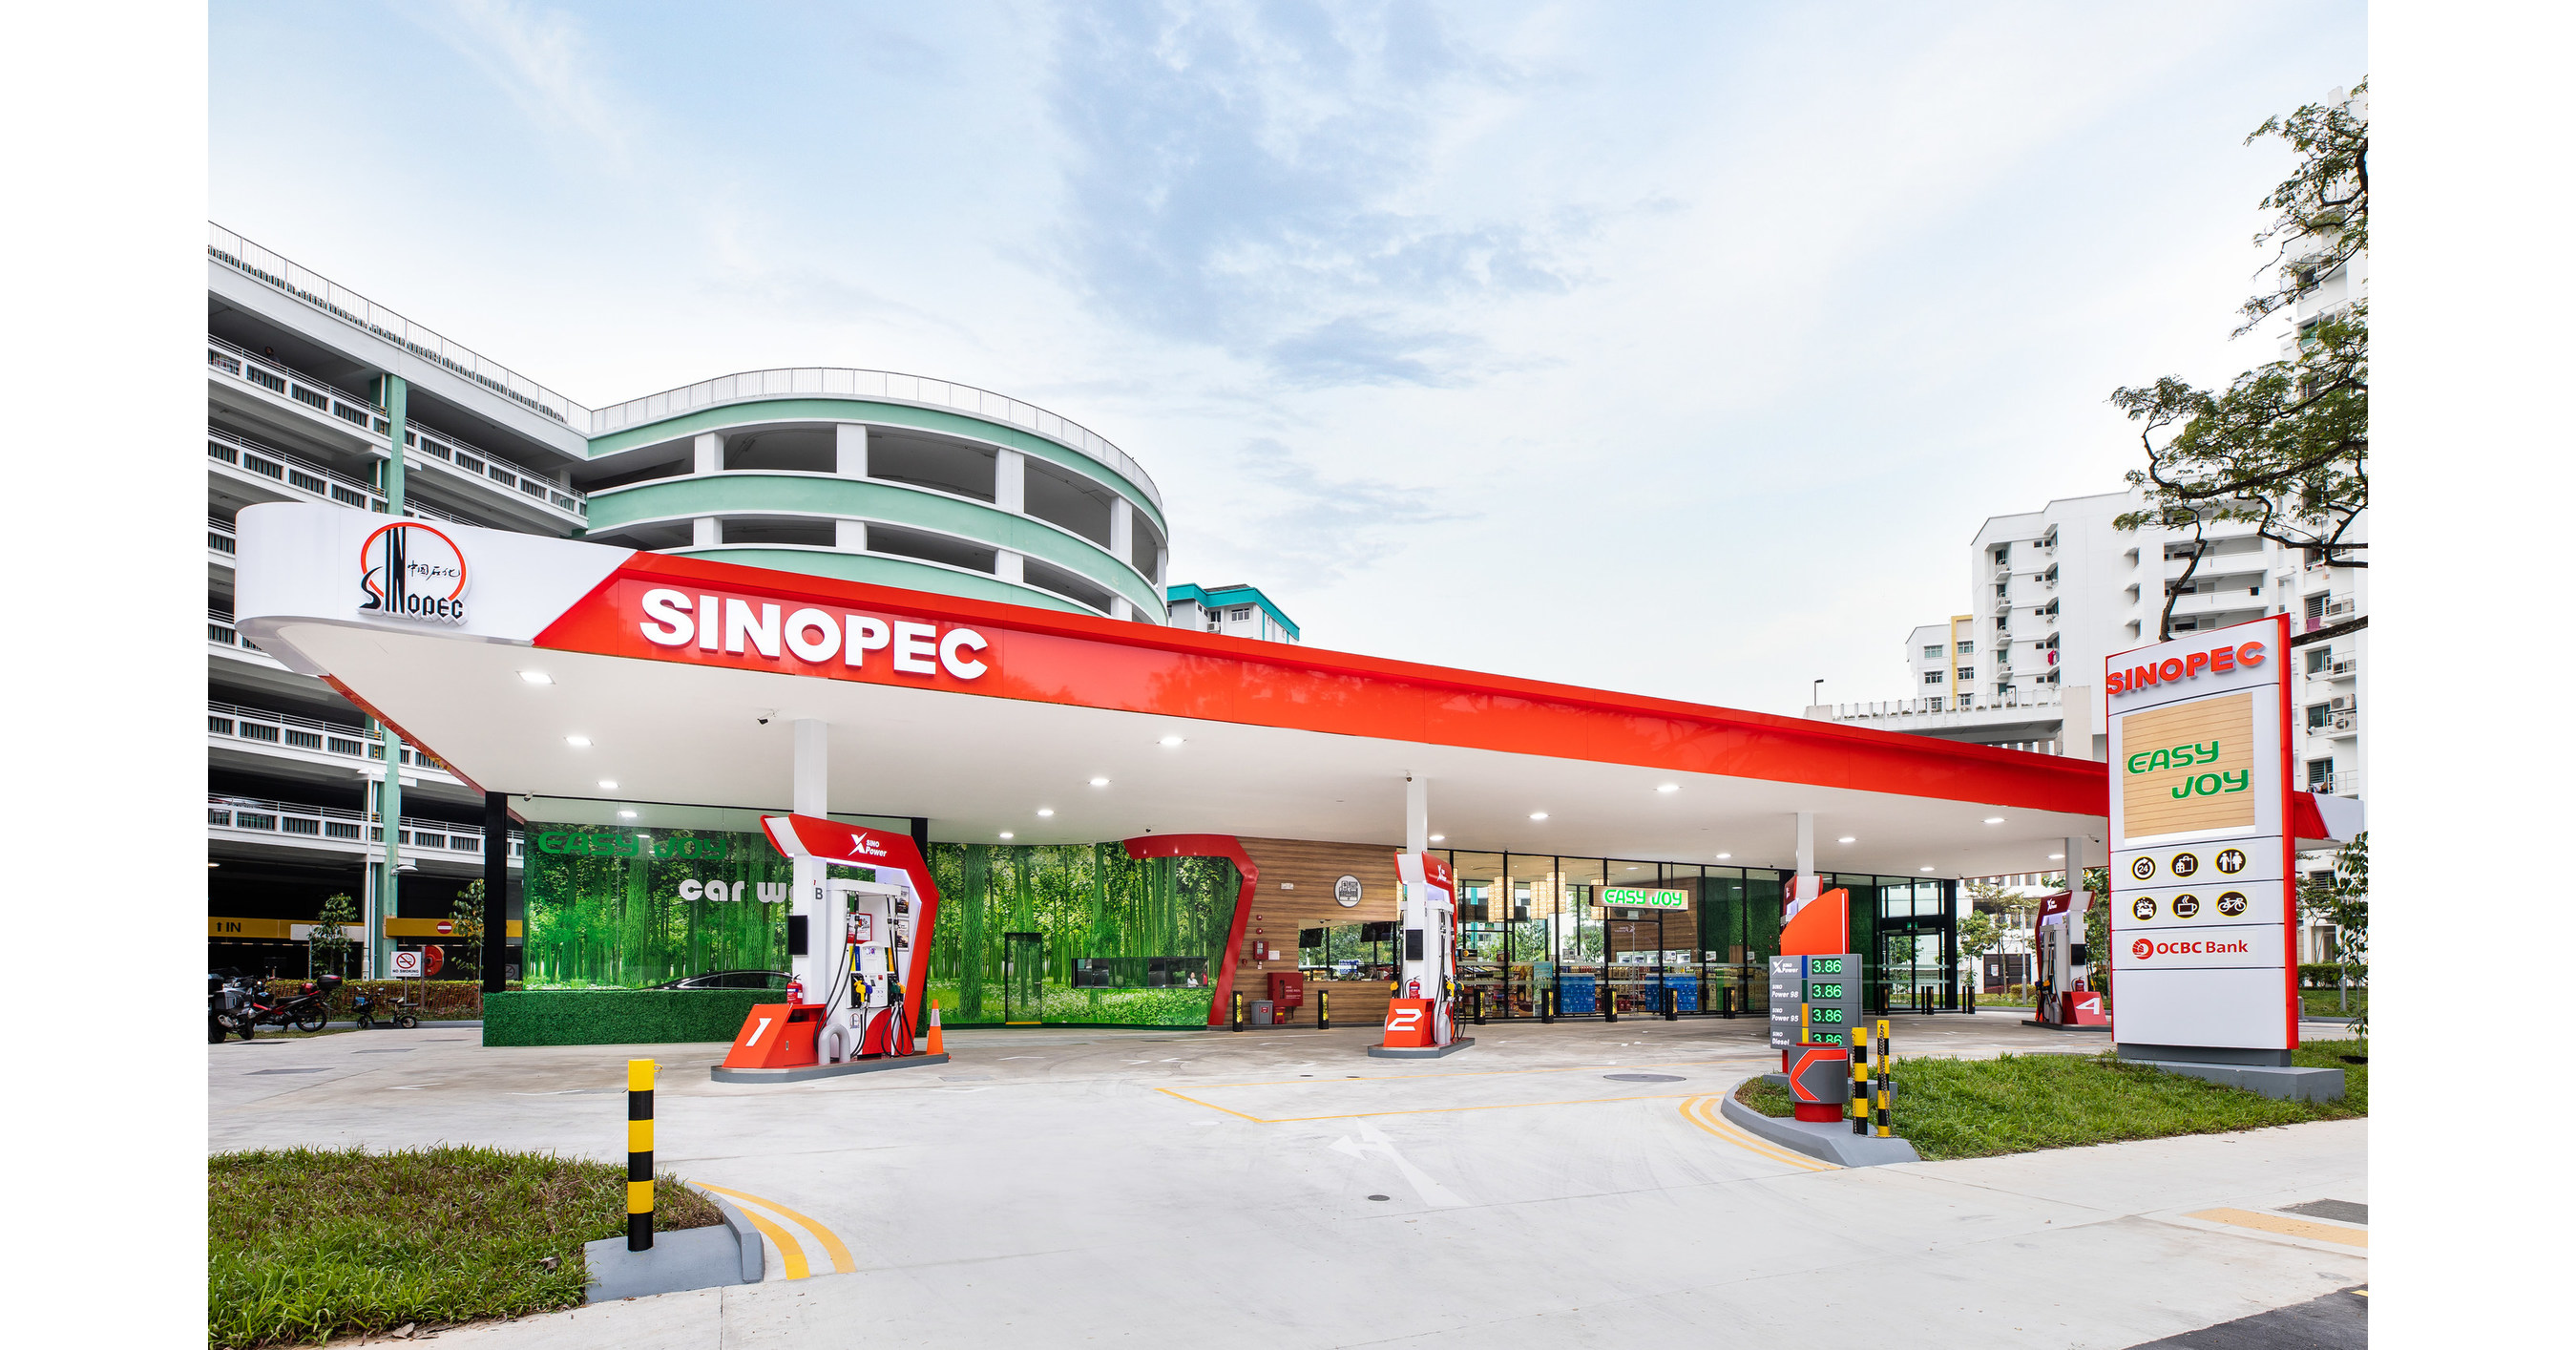 China’s Sinopec to start operations in Sri Lanka in Sept.